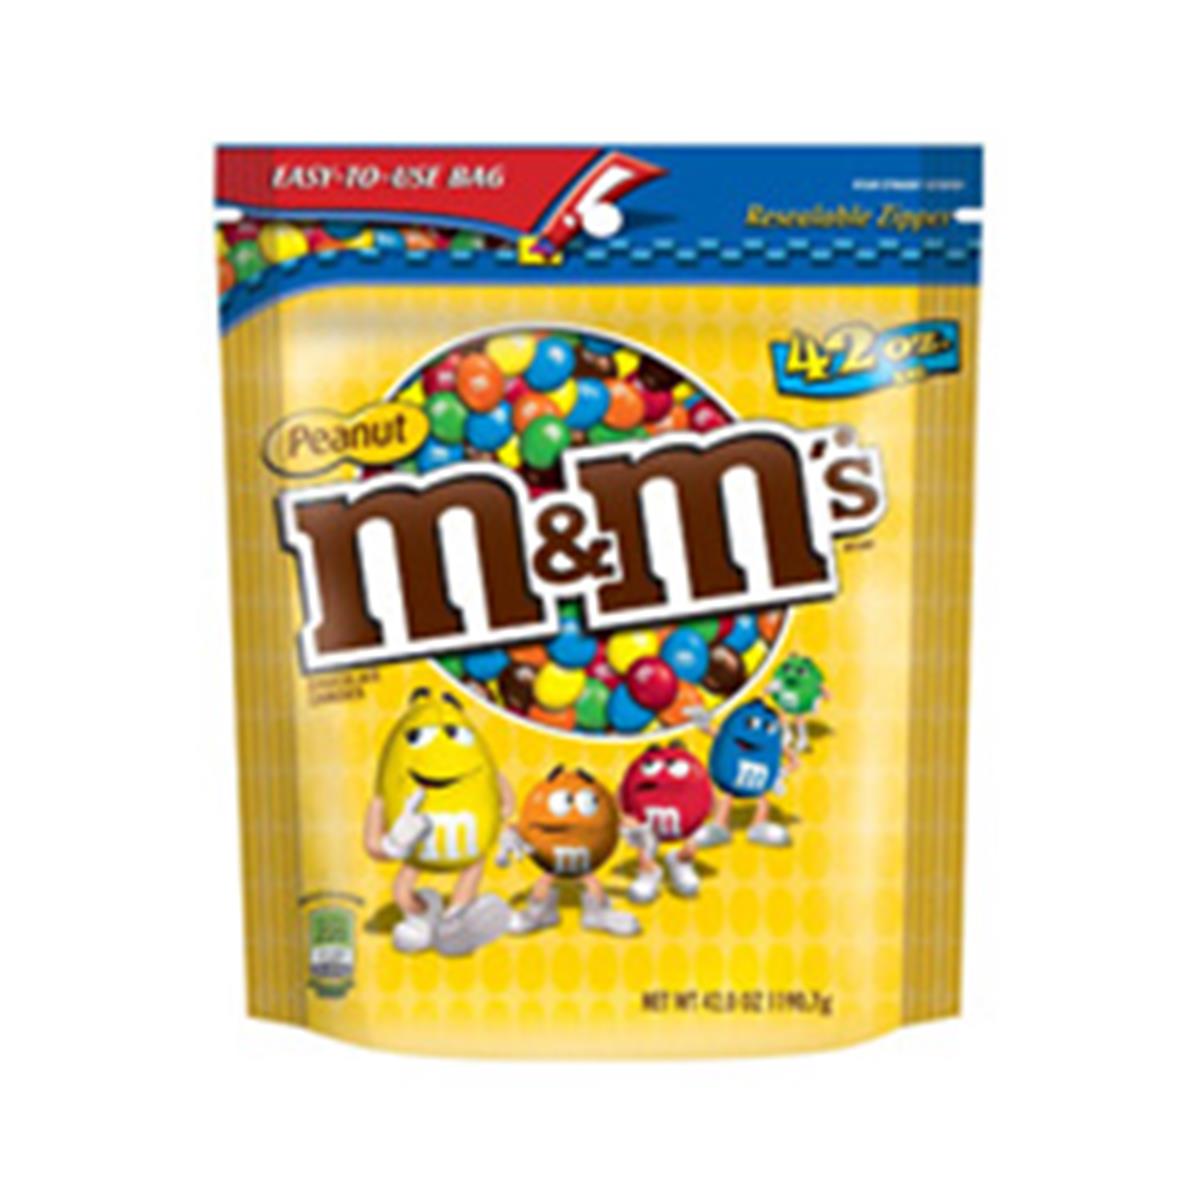 99996mm02 42 Oz Chocolate Peanut M&m Candy